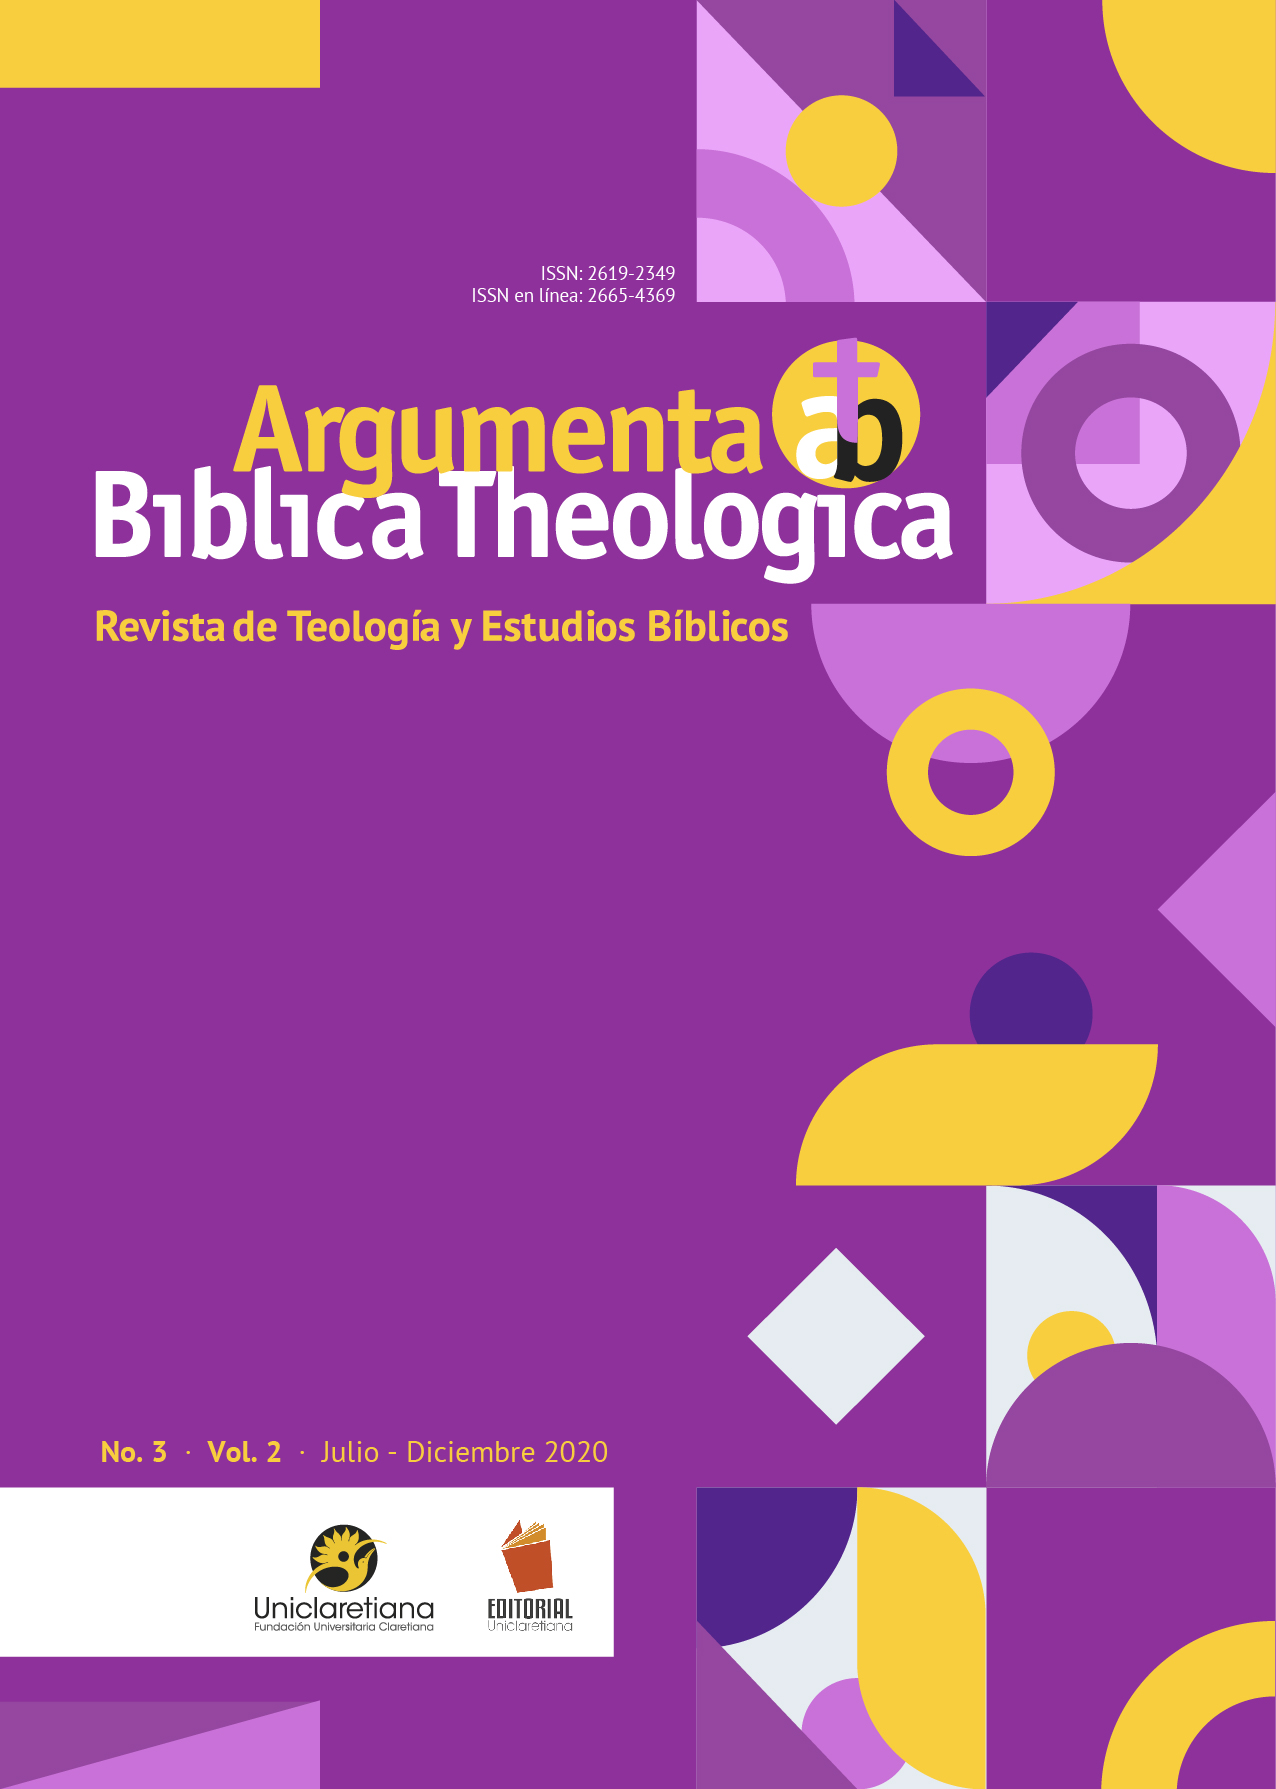 Imagen de la portada de la Revista Argumenta Biblica Theologica número 3